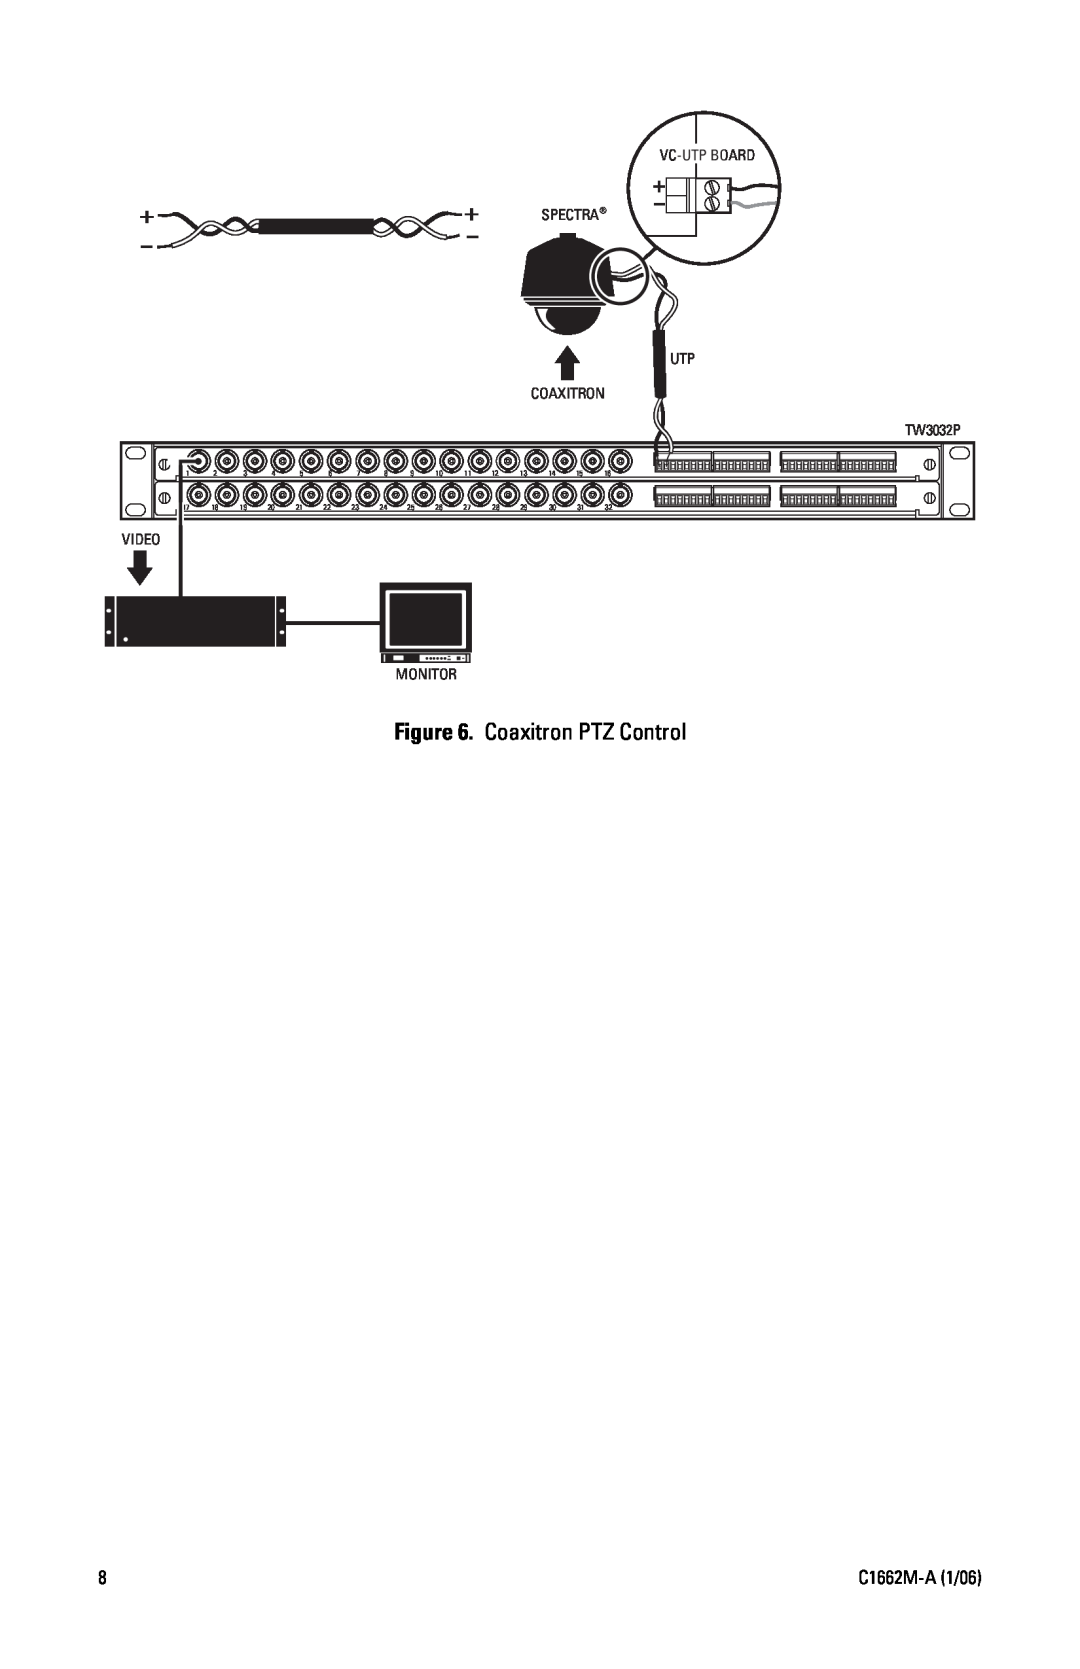 Pelco manual Coaxitron PTZ Control, C1662M-A1/06, Vc-Utpboard Spectra Utp Coaxitron, TW3032P, Monitor 